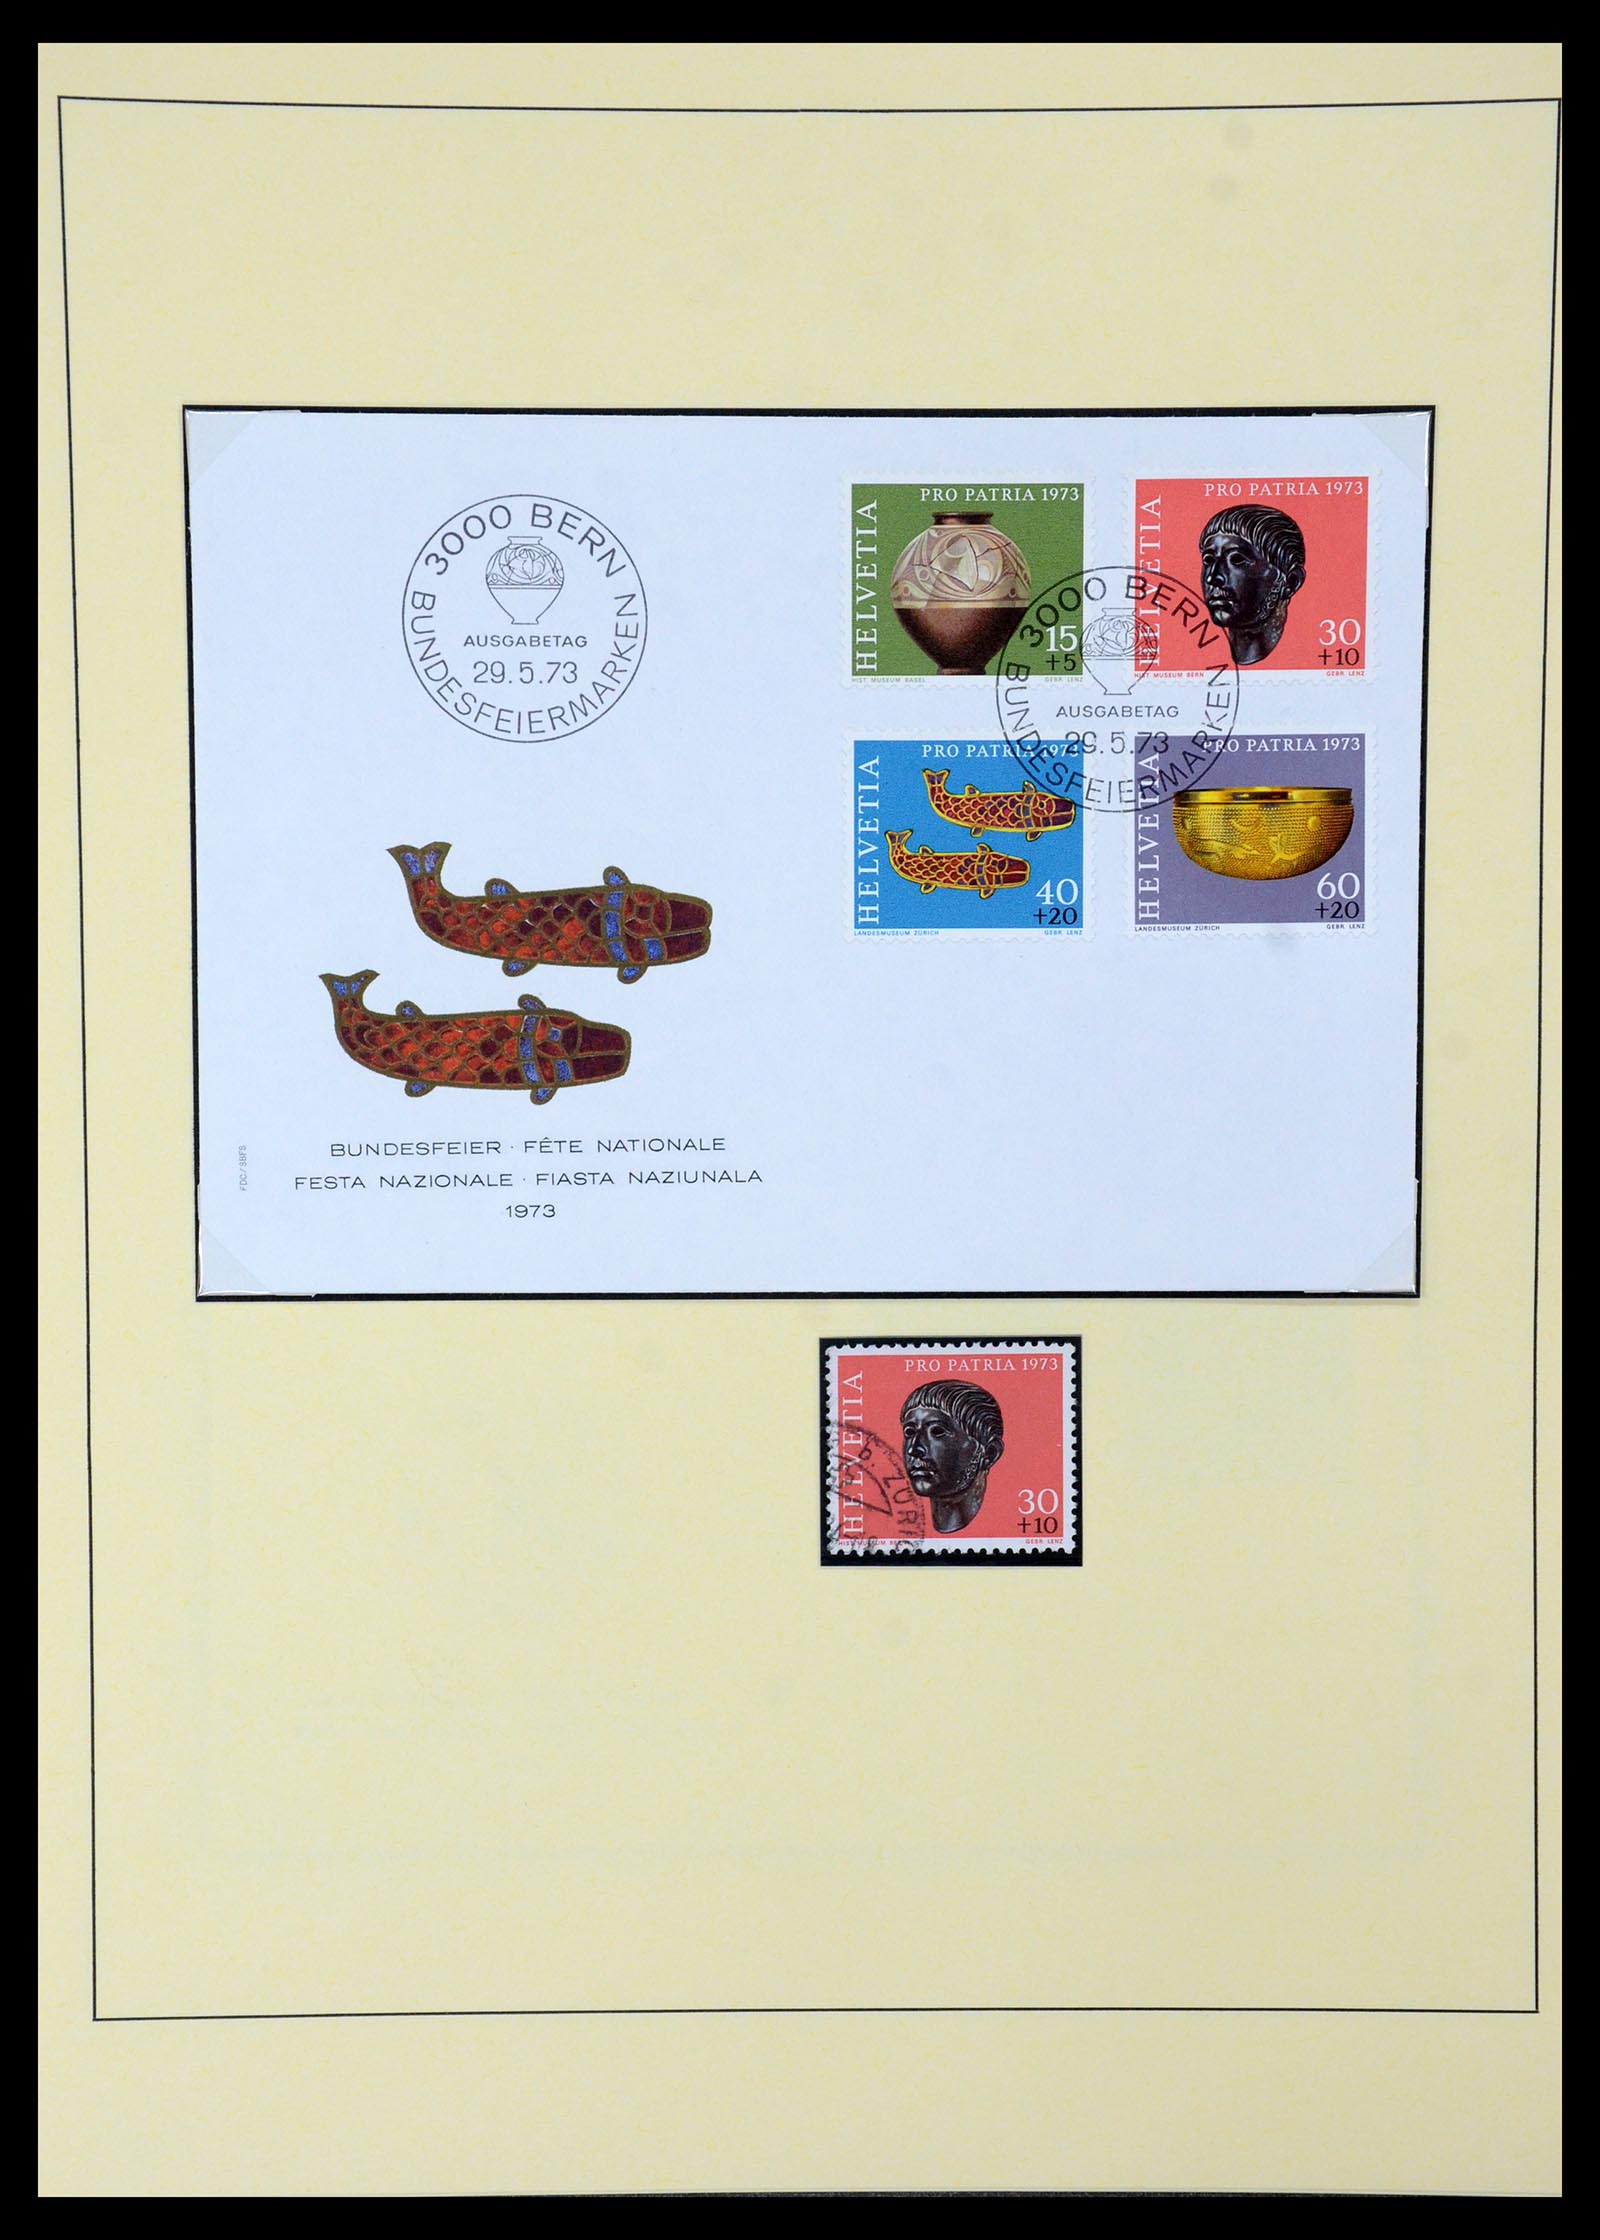 35668 061 - Stamp Collection 35668 Switzerland Pro Juventute and Pro Patria 1910-197